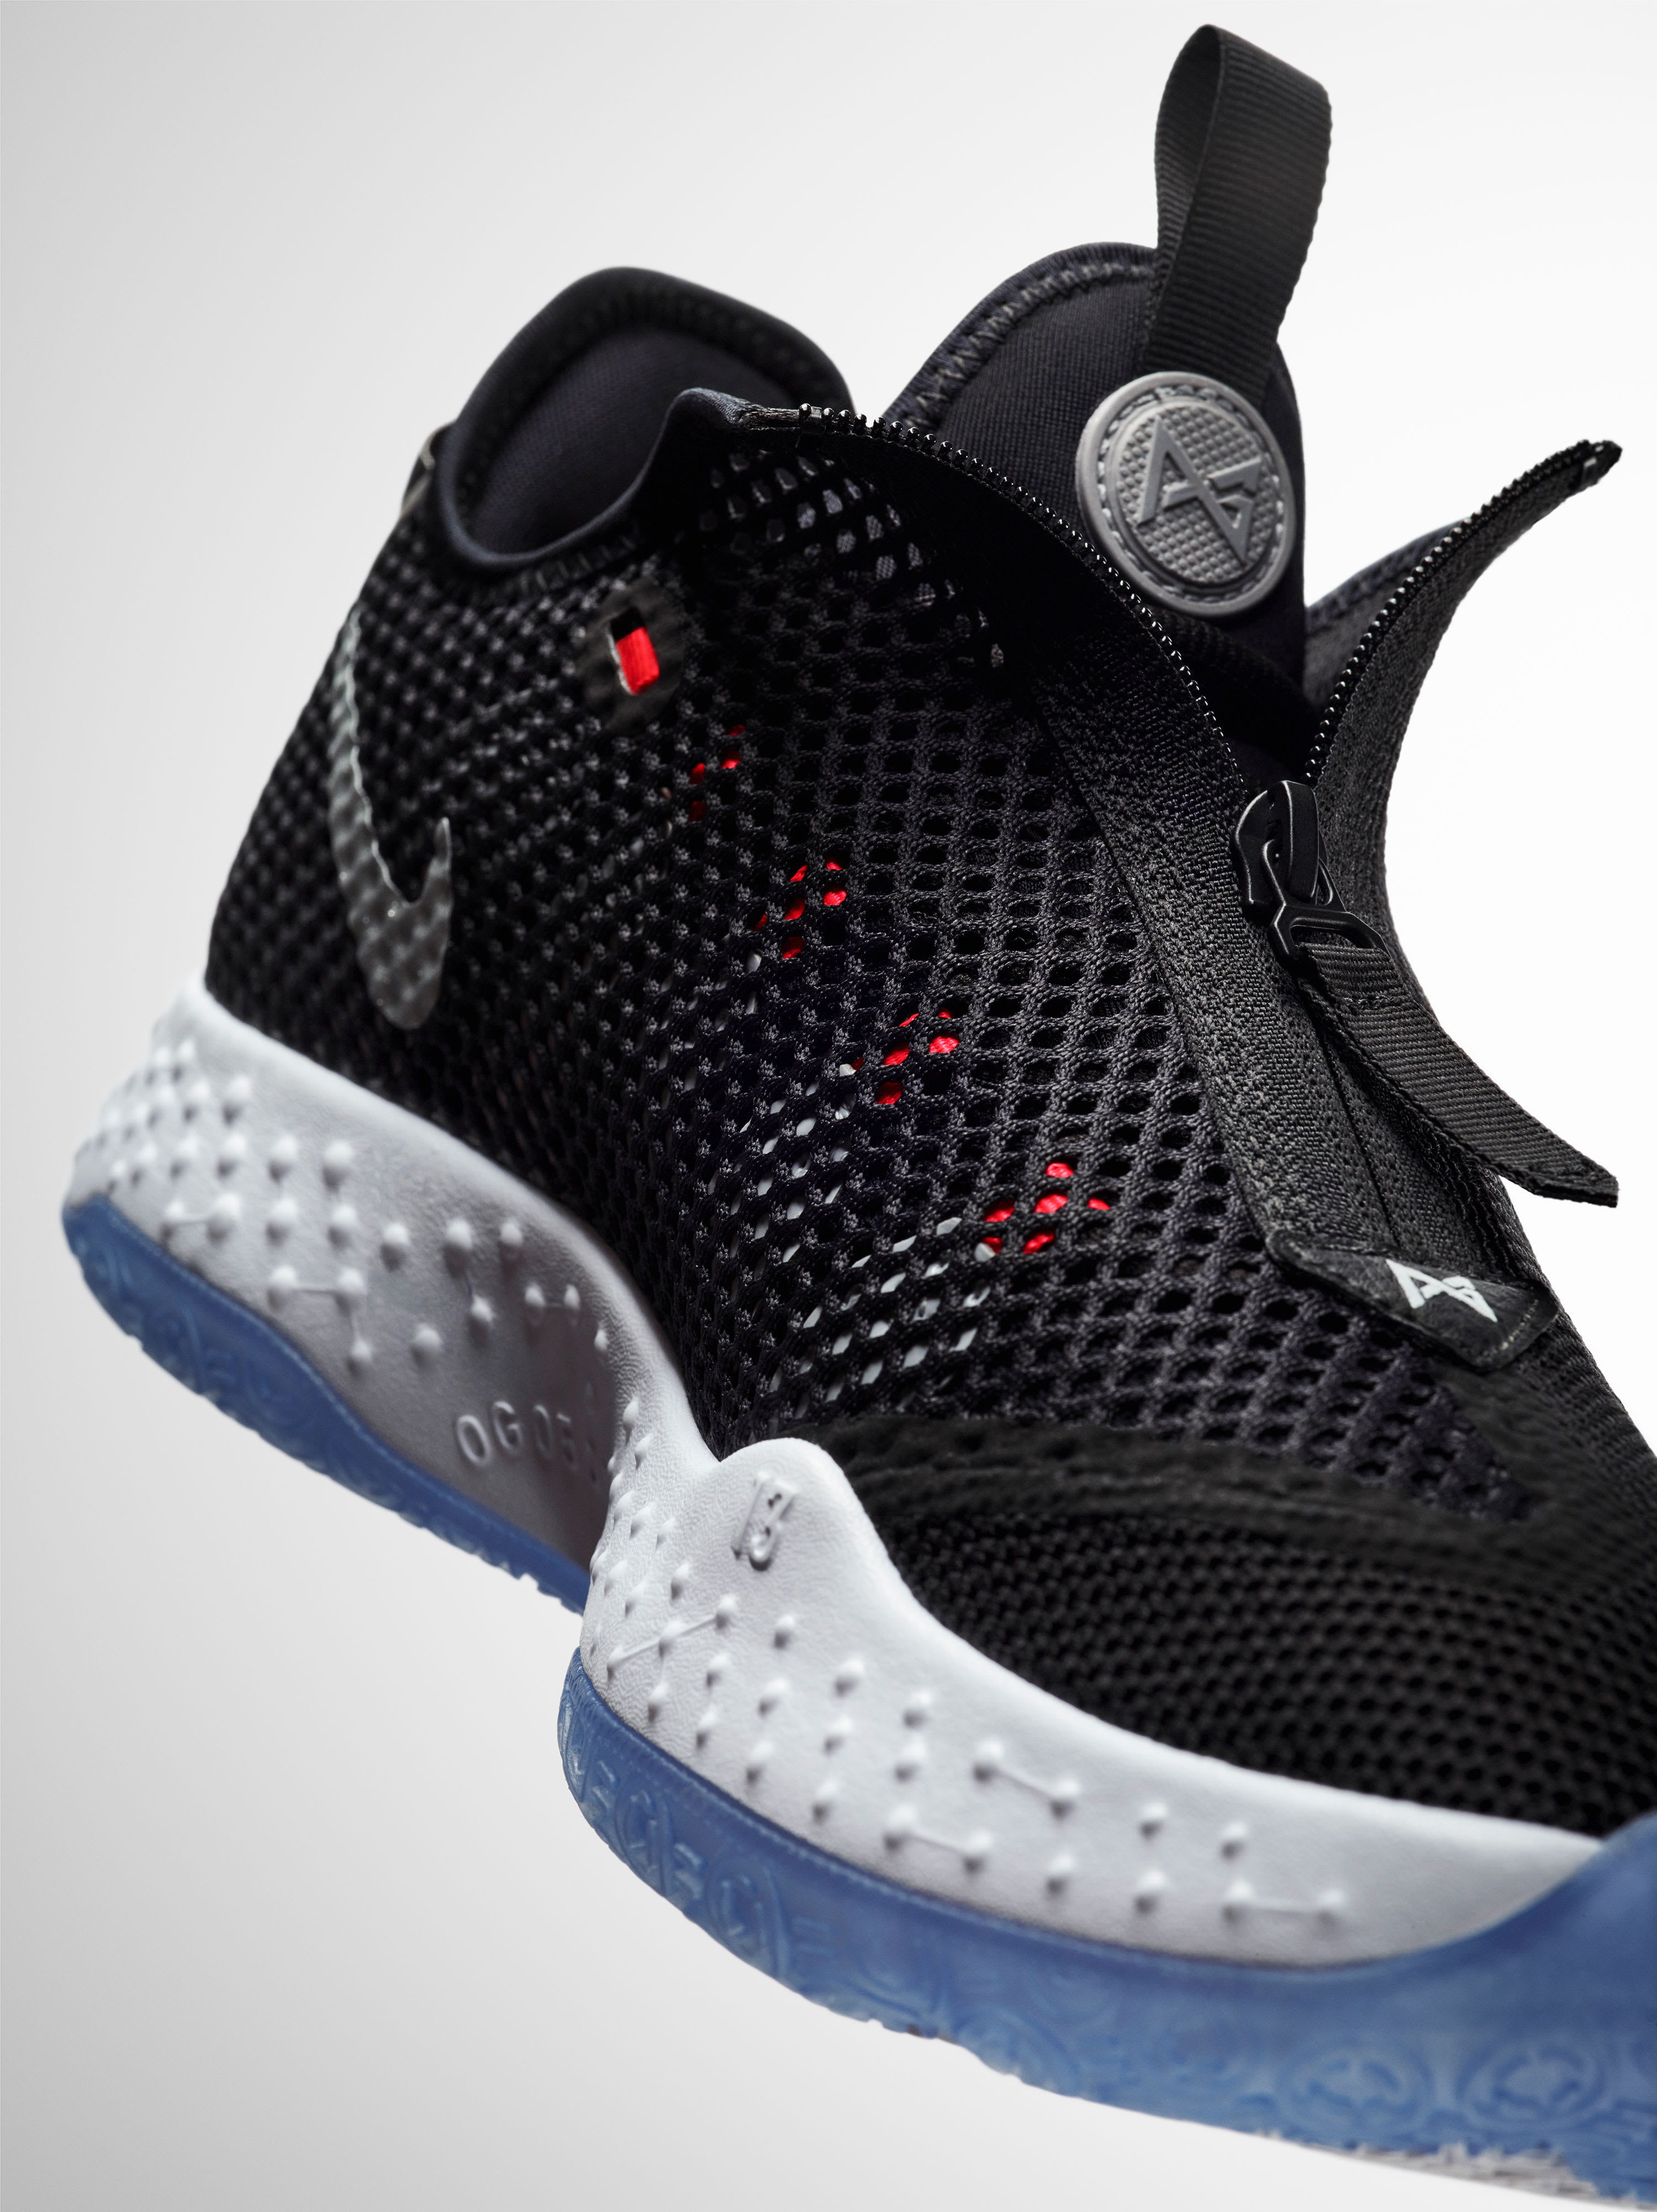 Nike PG 4 Black White Release Date CD5082-001 Medial Unzipped